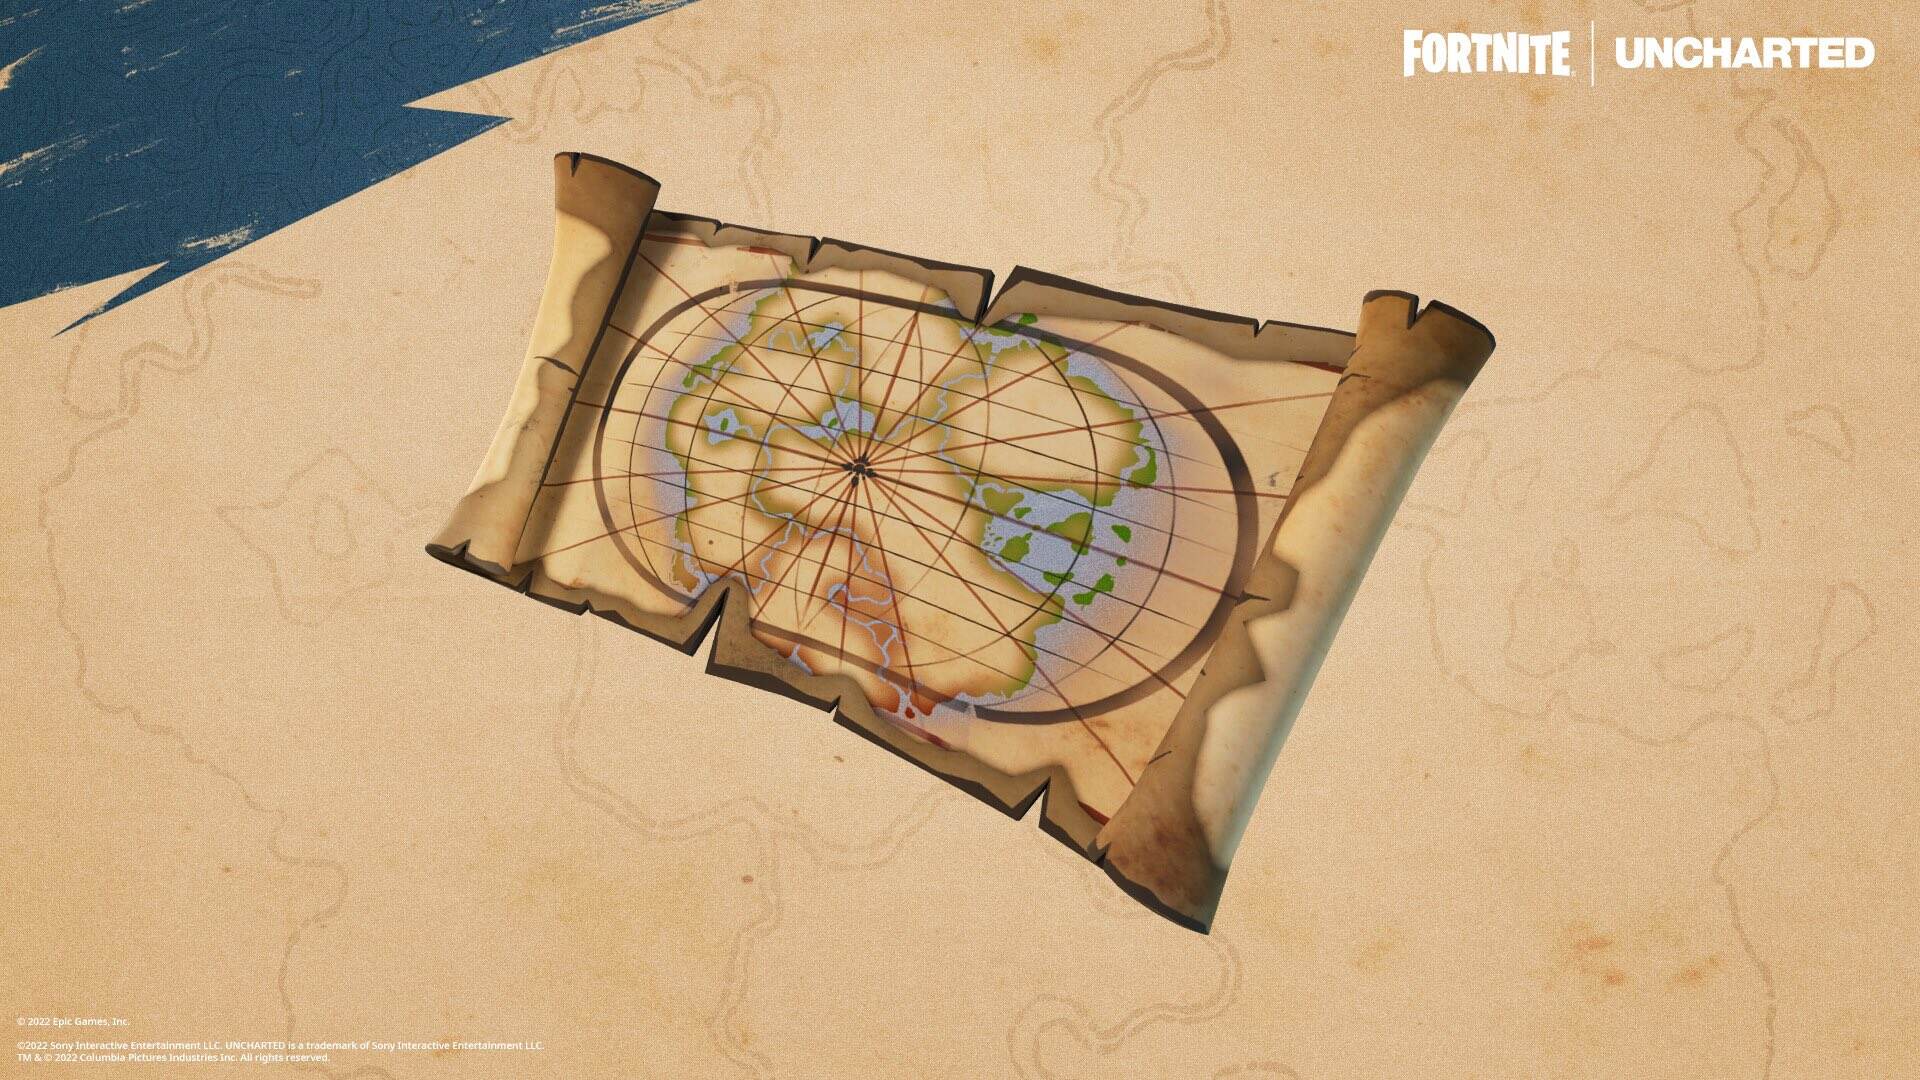 Collect treasure using Drake's Map